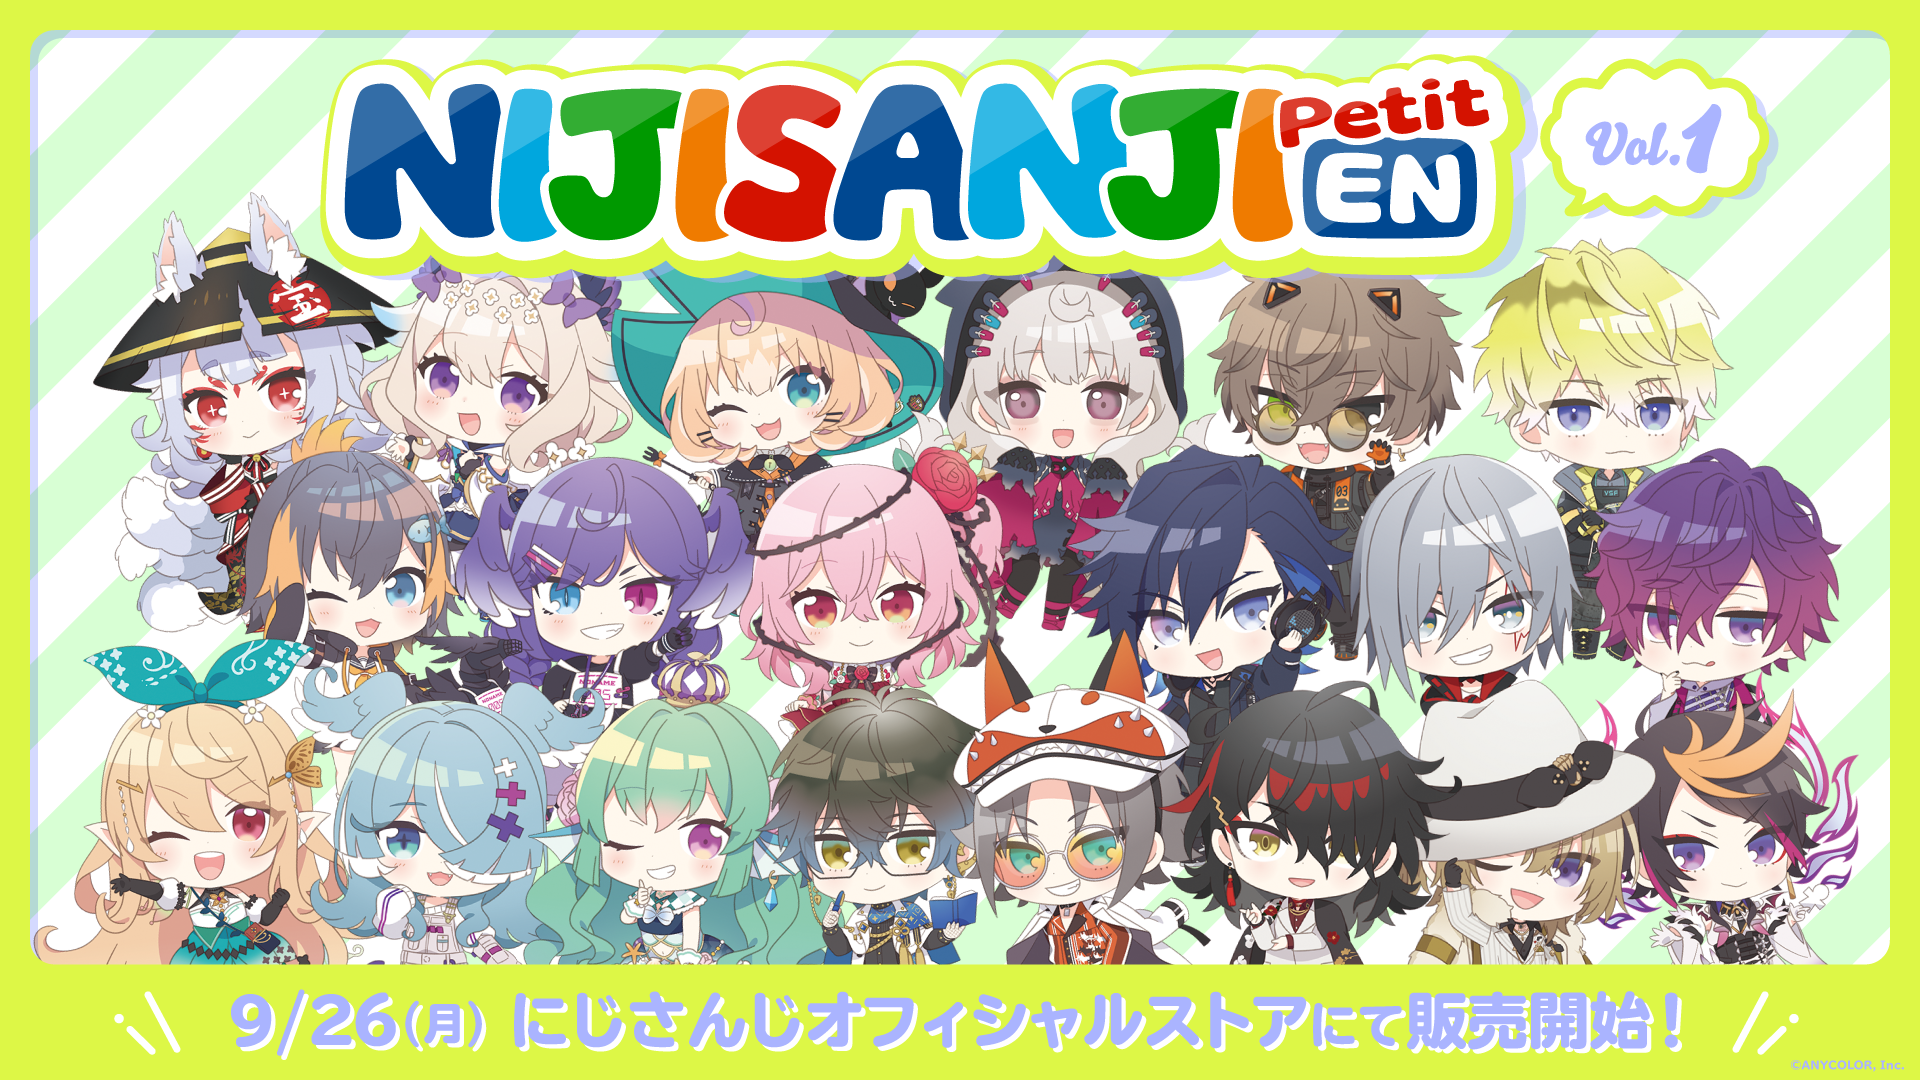 Nijisanji Enのデフォルメイラストグッズ Nijisanji En Petit Vol 1 22年9月26日 月 11時 Jst より販売決定 Anycolor株式会社のプレスリリース